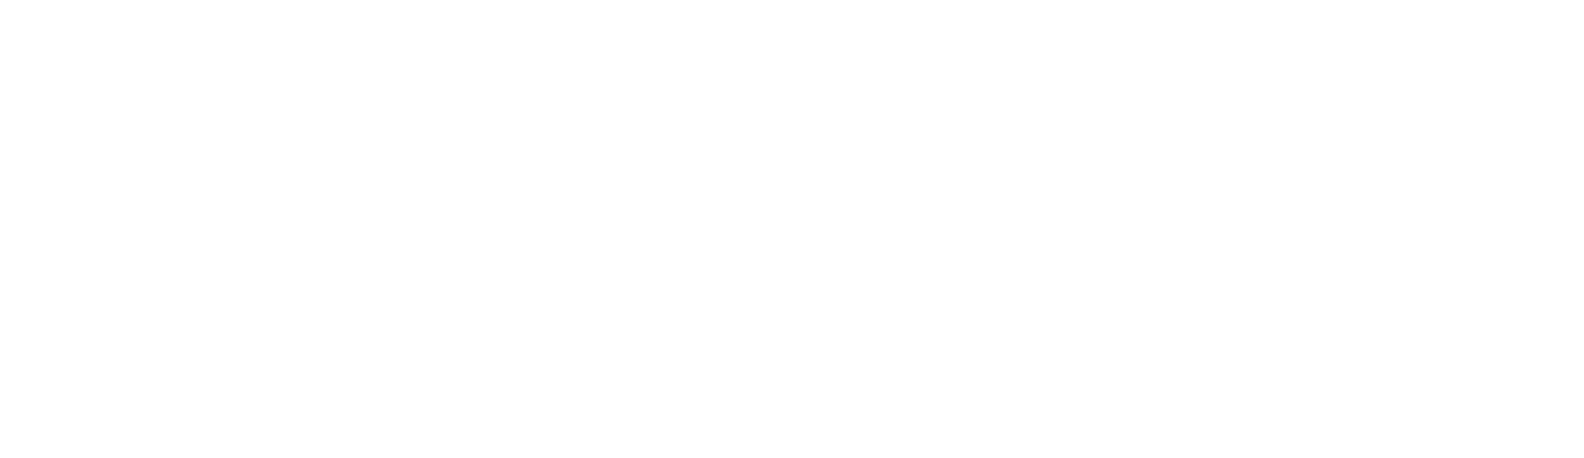 SEACOR Marine logo large for dark backgrounds (transparent PNG)